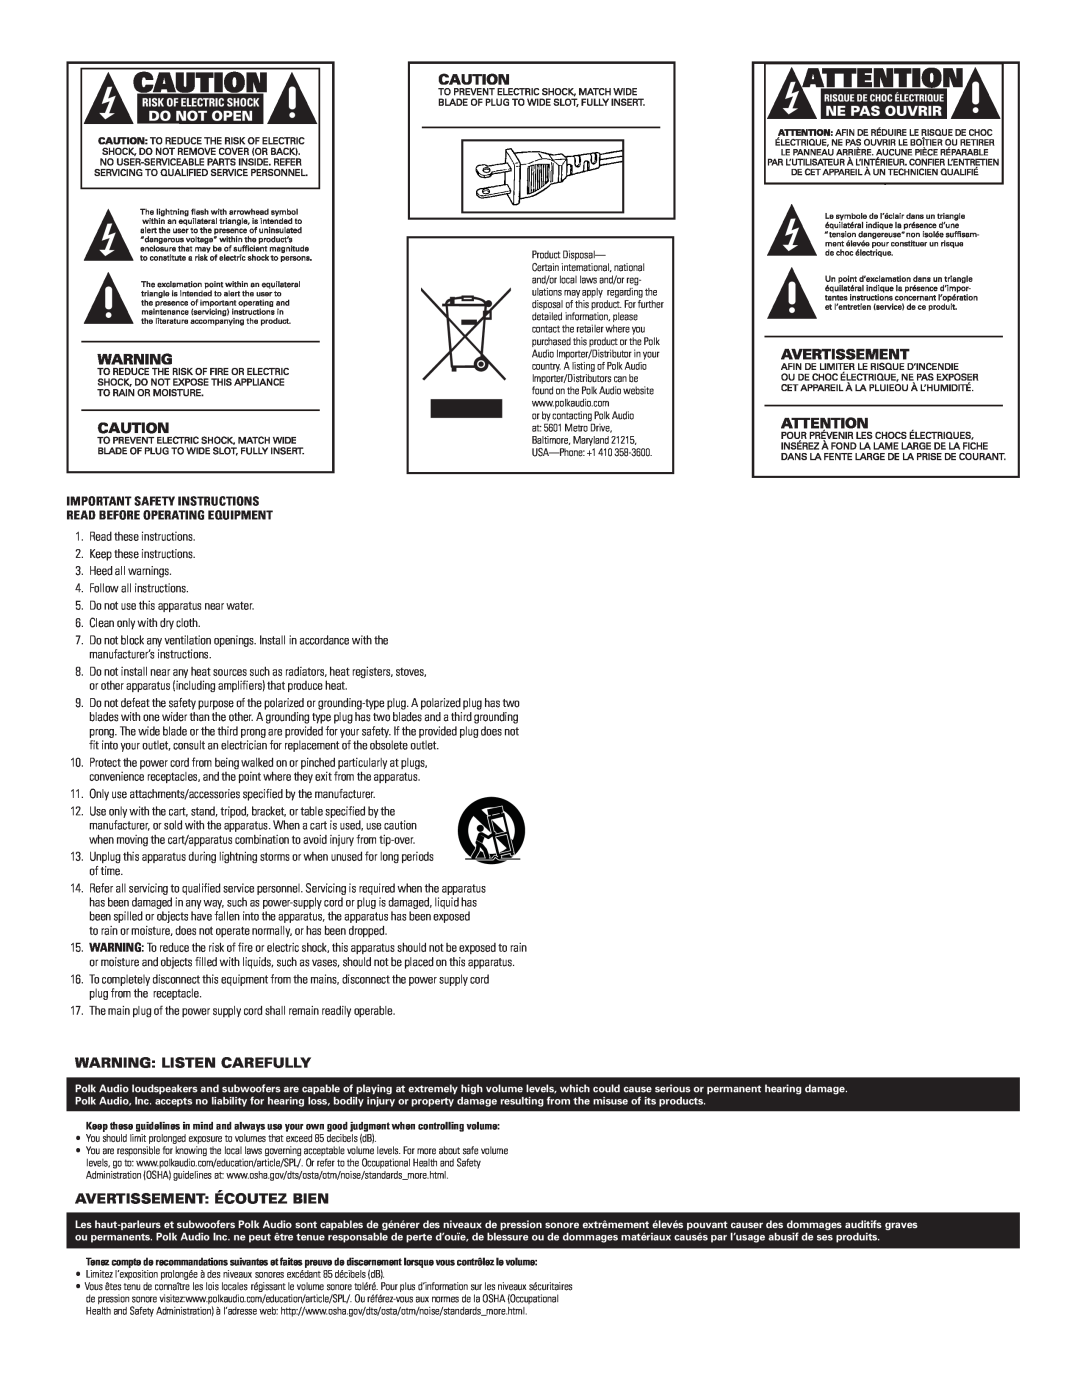 Polk Audio PSW108 owner manual Warning Listen Carefully, Avertissement Écoutez Bien, Important Safety Instructions 